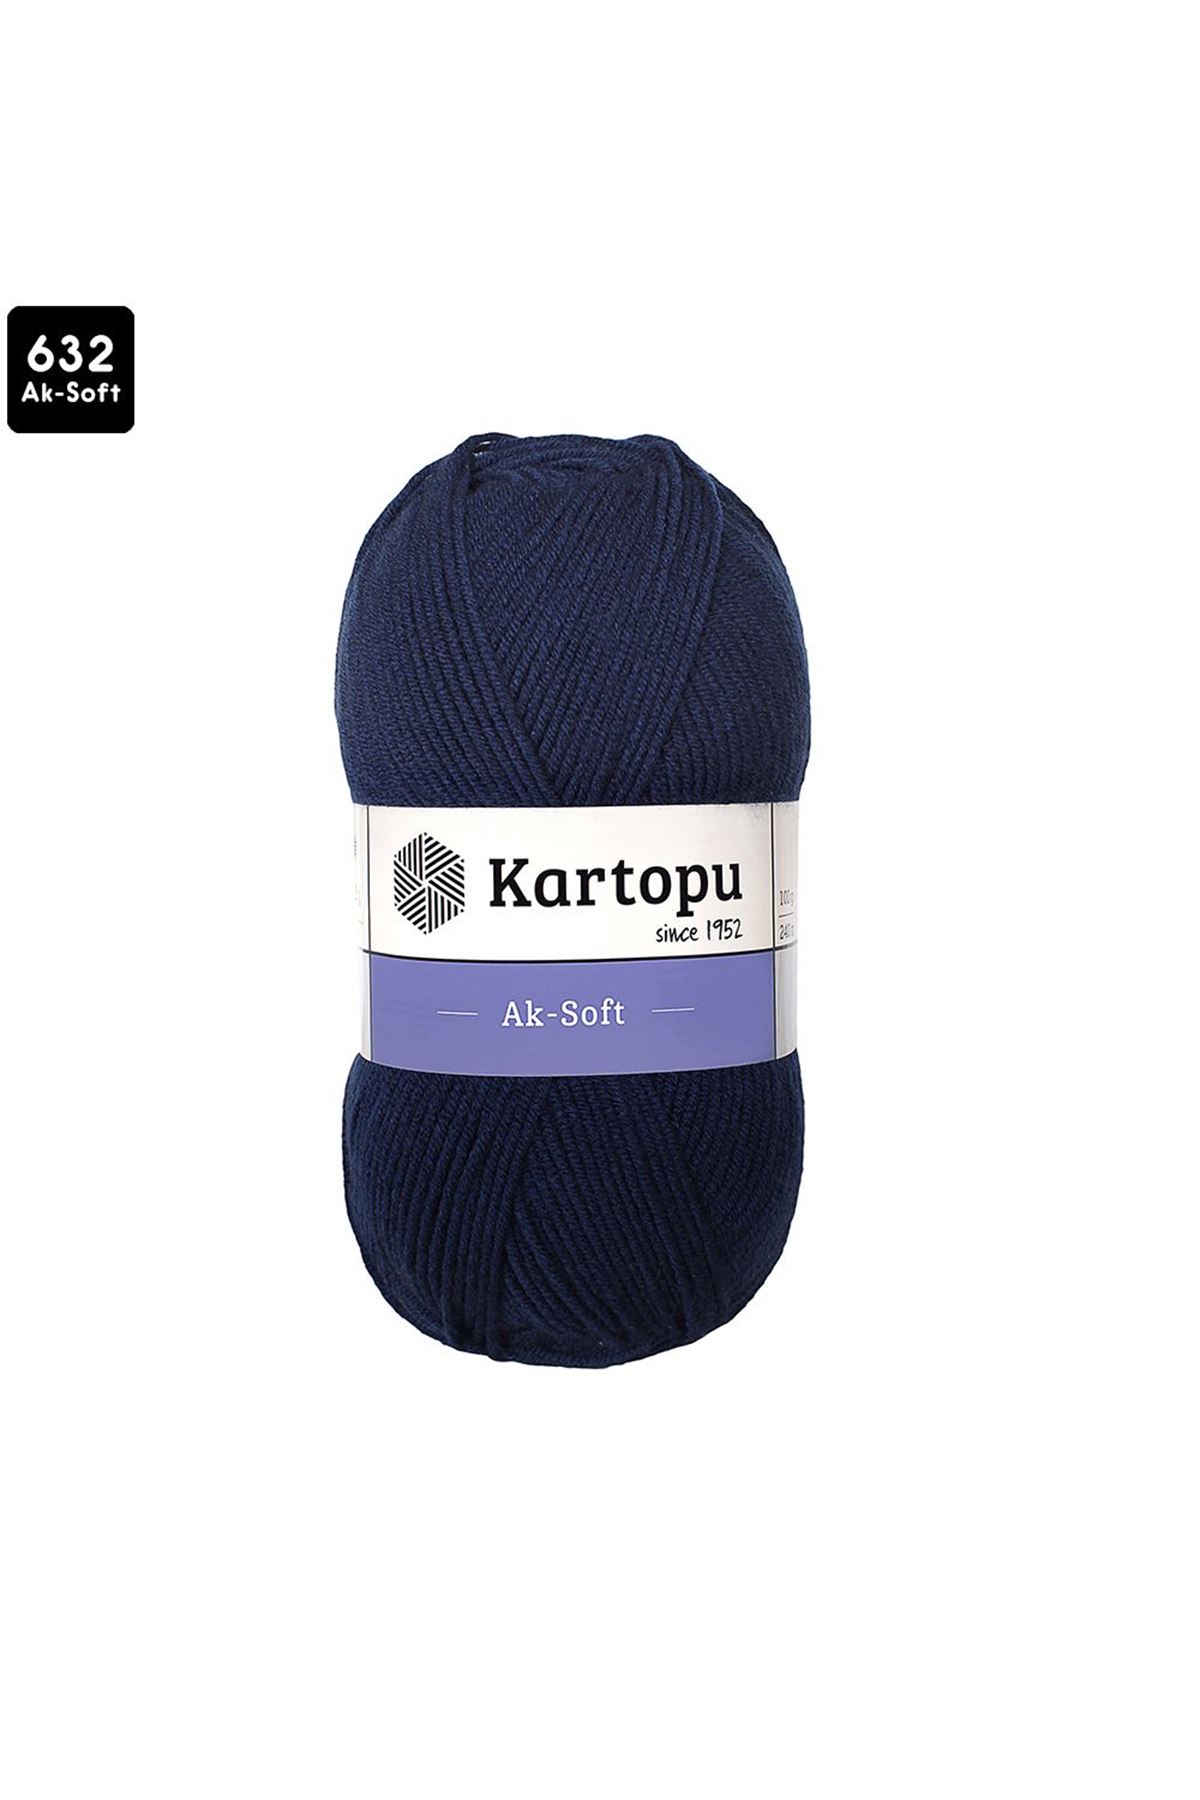 Kartopu Ak-Soft Renk No:632